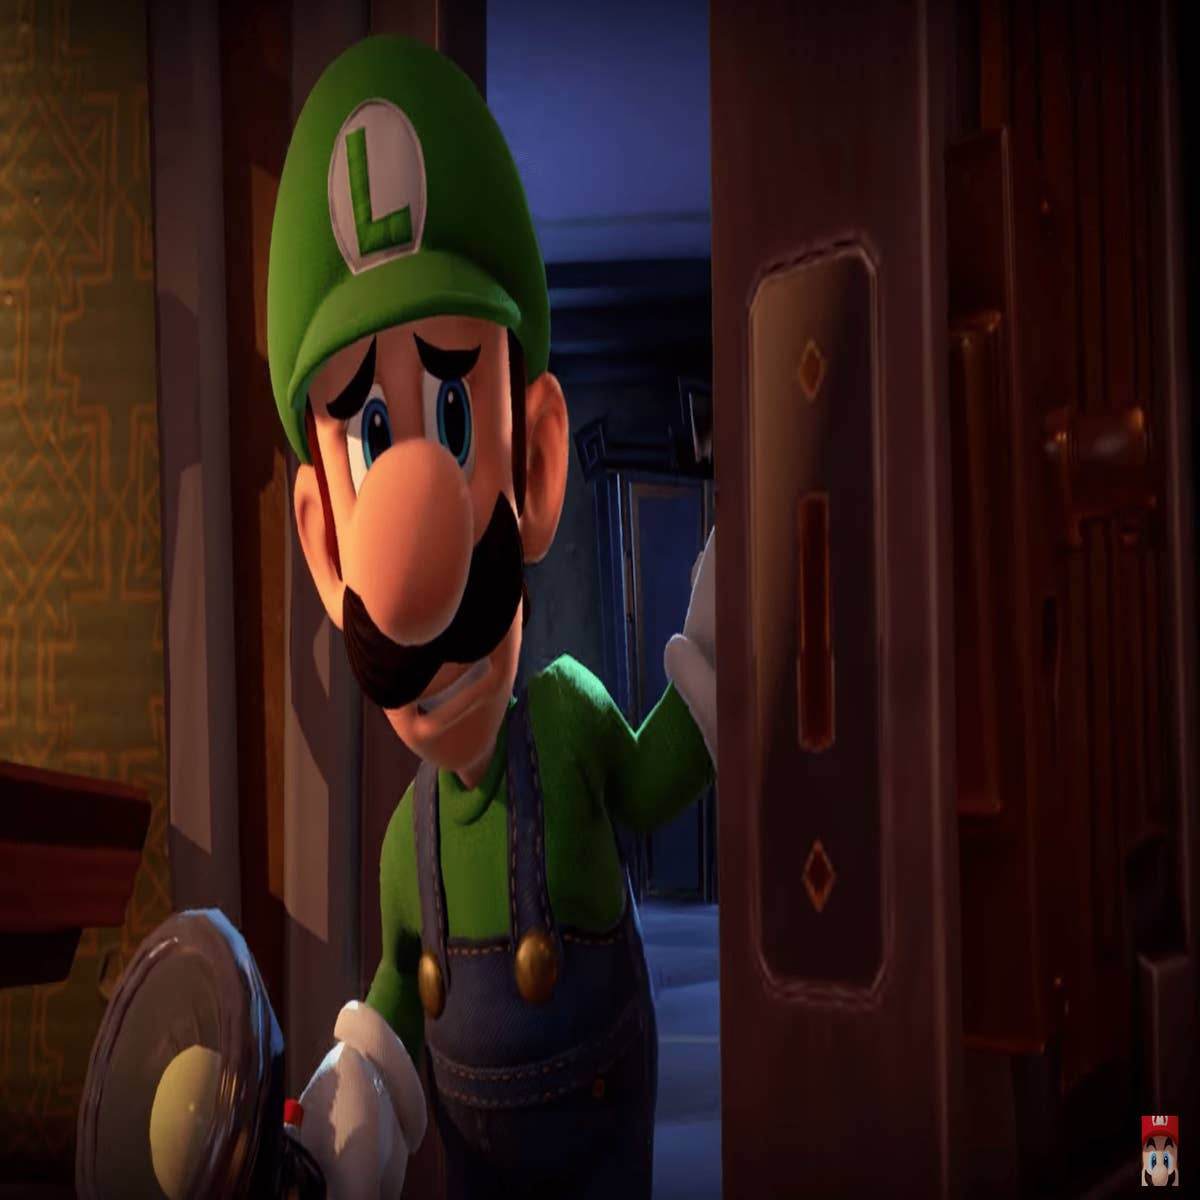 Luigi's Mansion 3 #4 - Descubra COMO é jogar com 2 JOGADORES ao mesmo tempo  no modo historia! 😱😱😱 